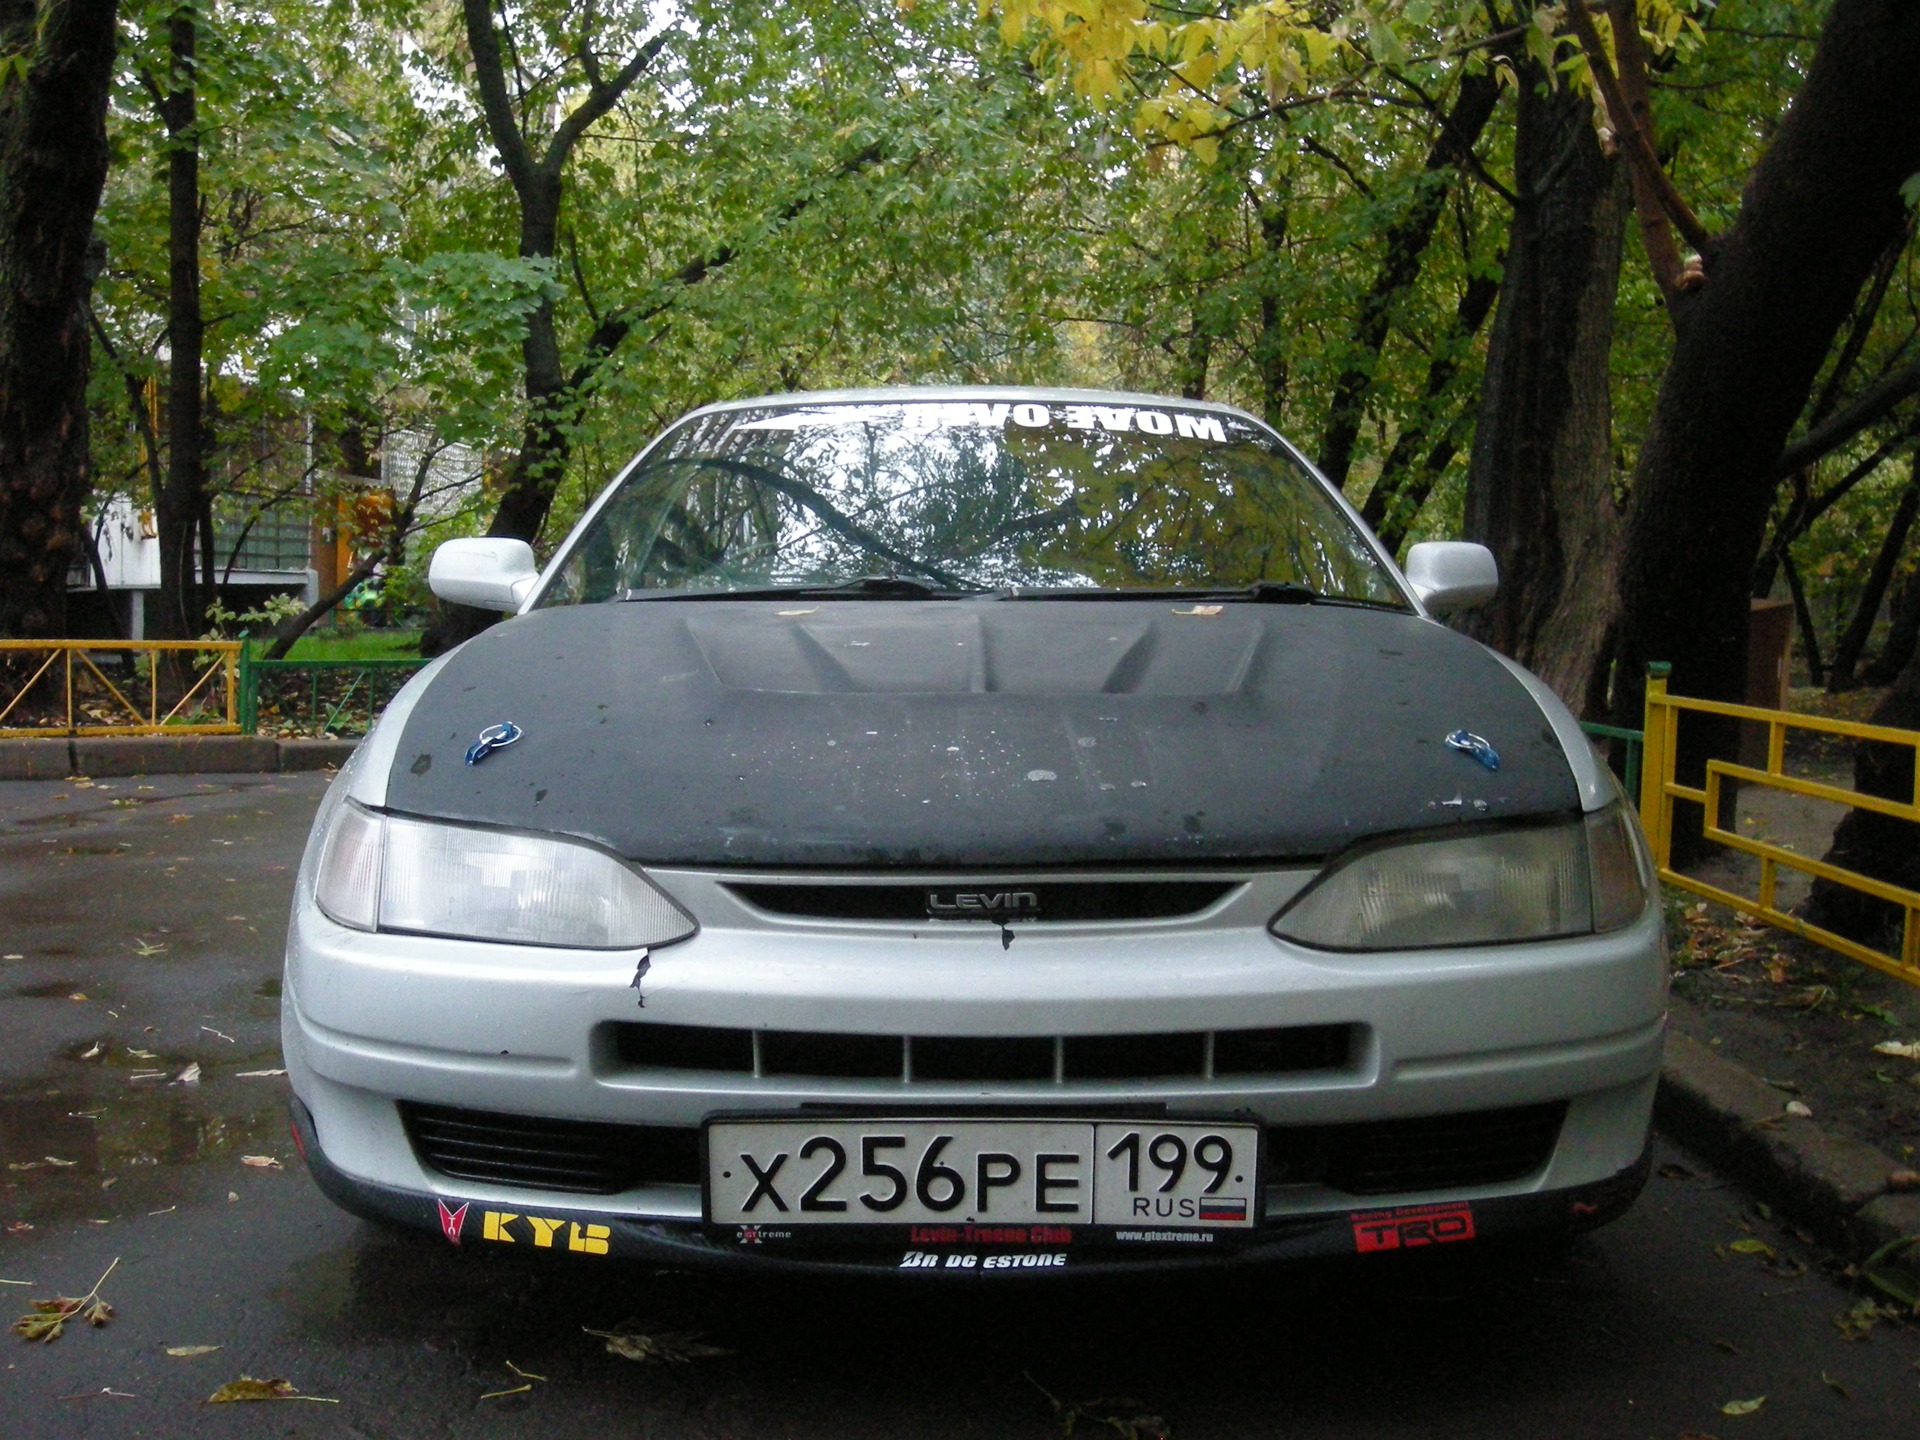  2 Toyota Corolla Levin 20 1996 